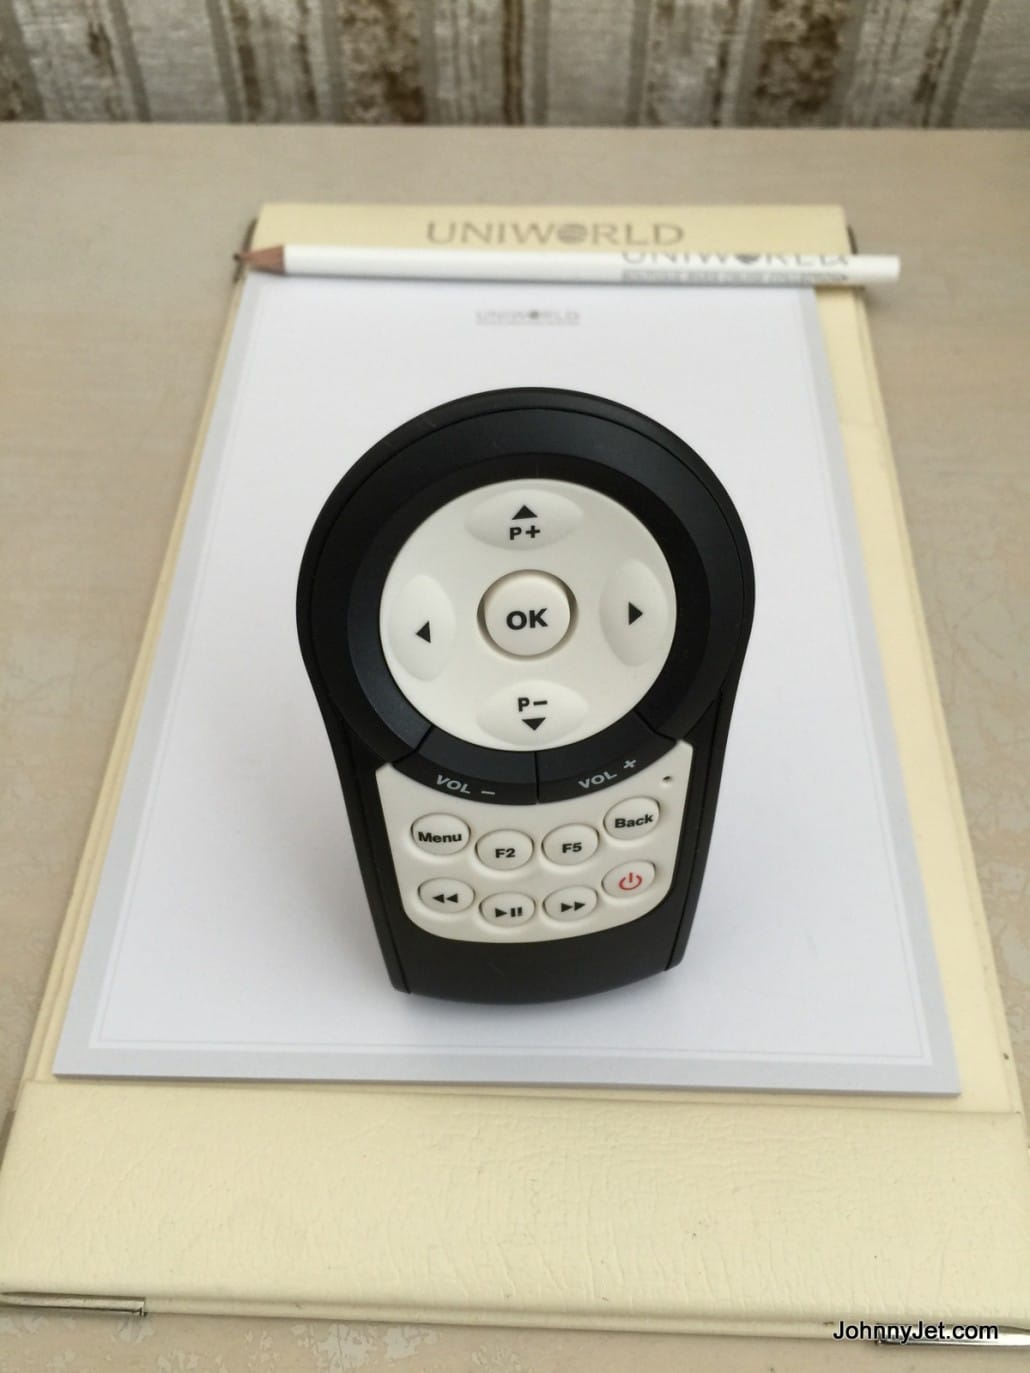 Uniworld TV remote